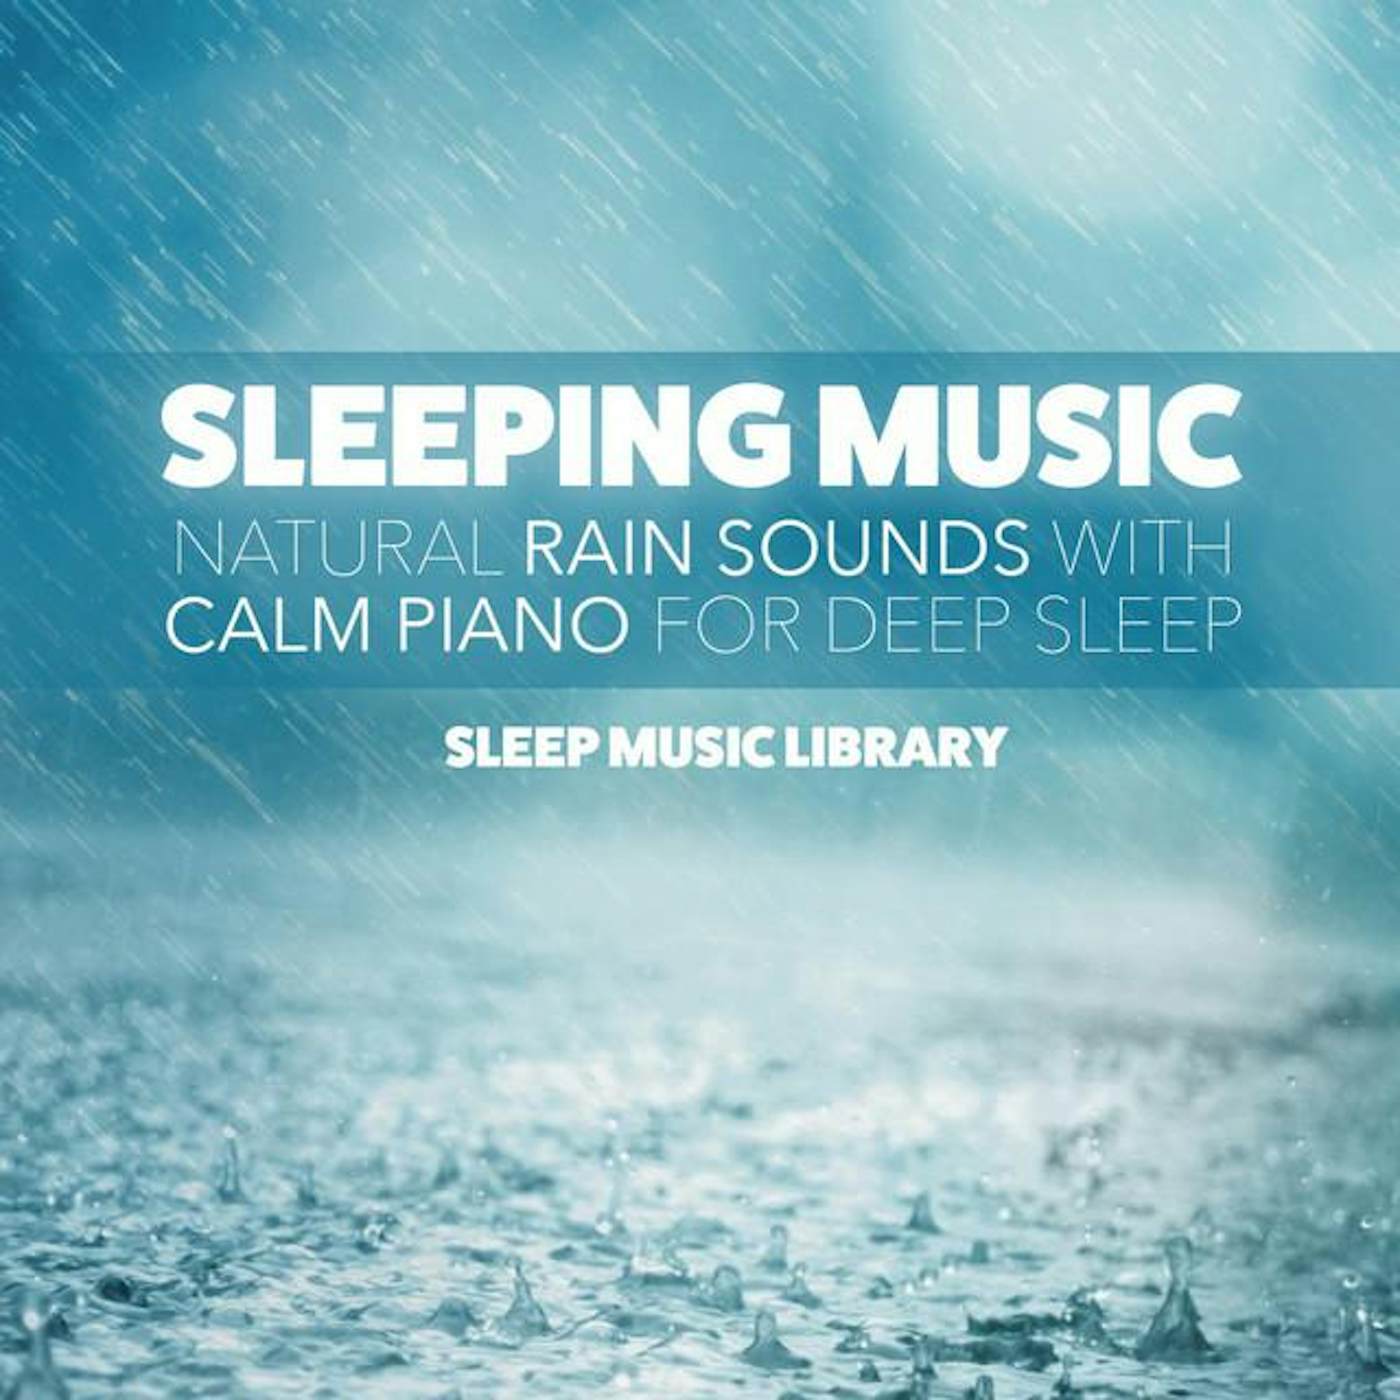 Sleep Music Library